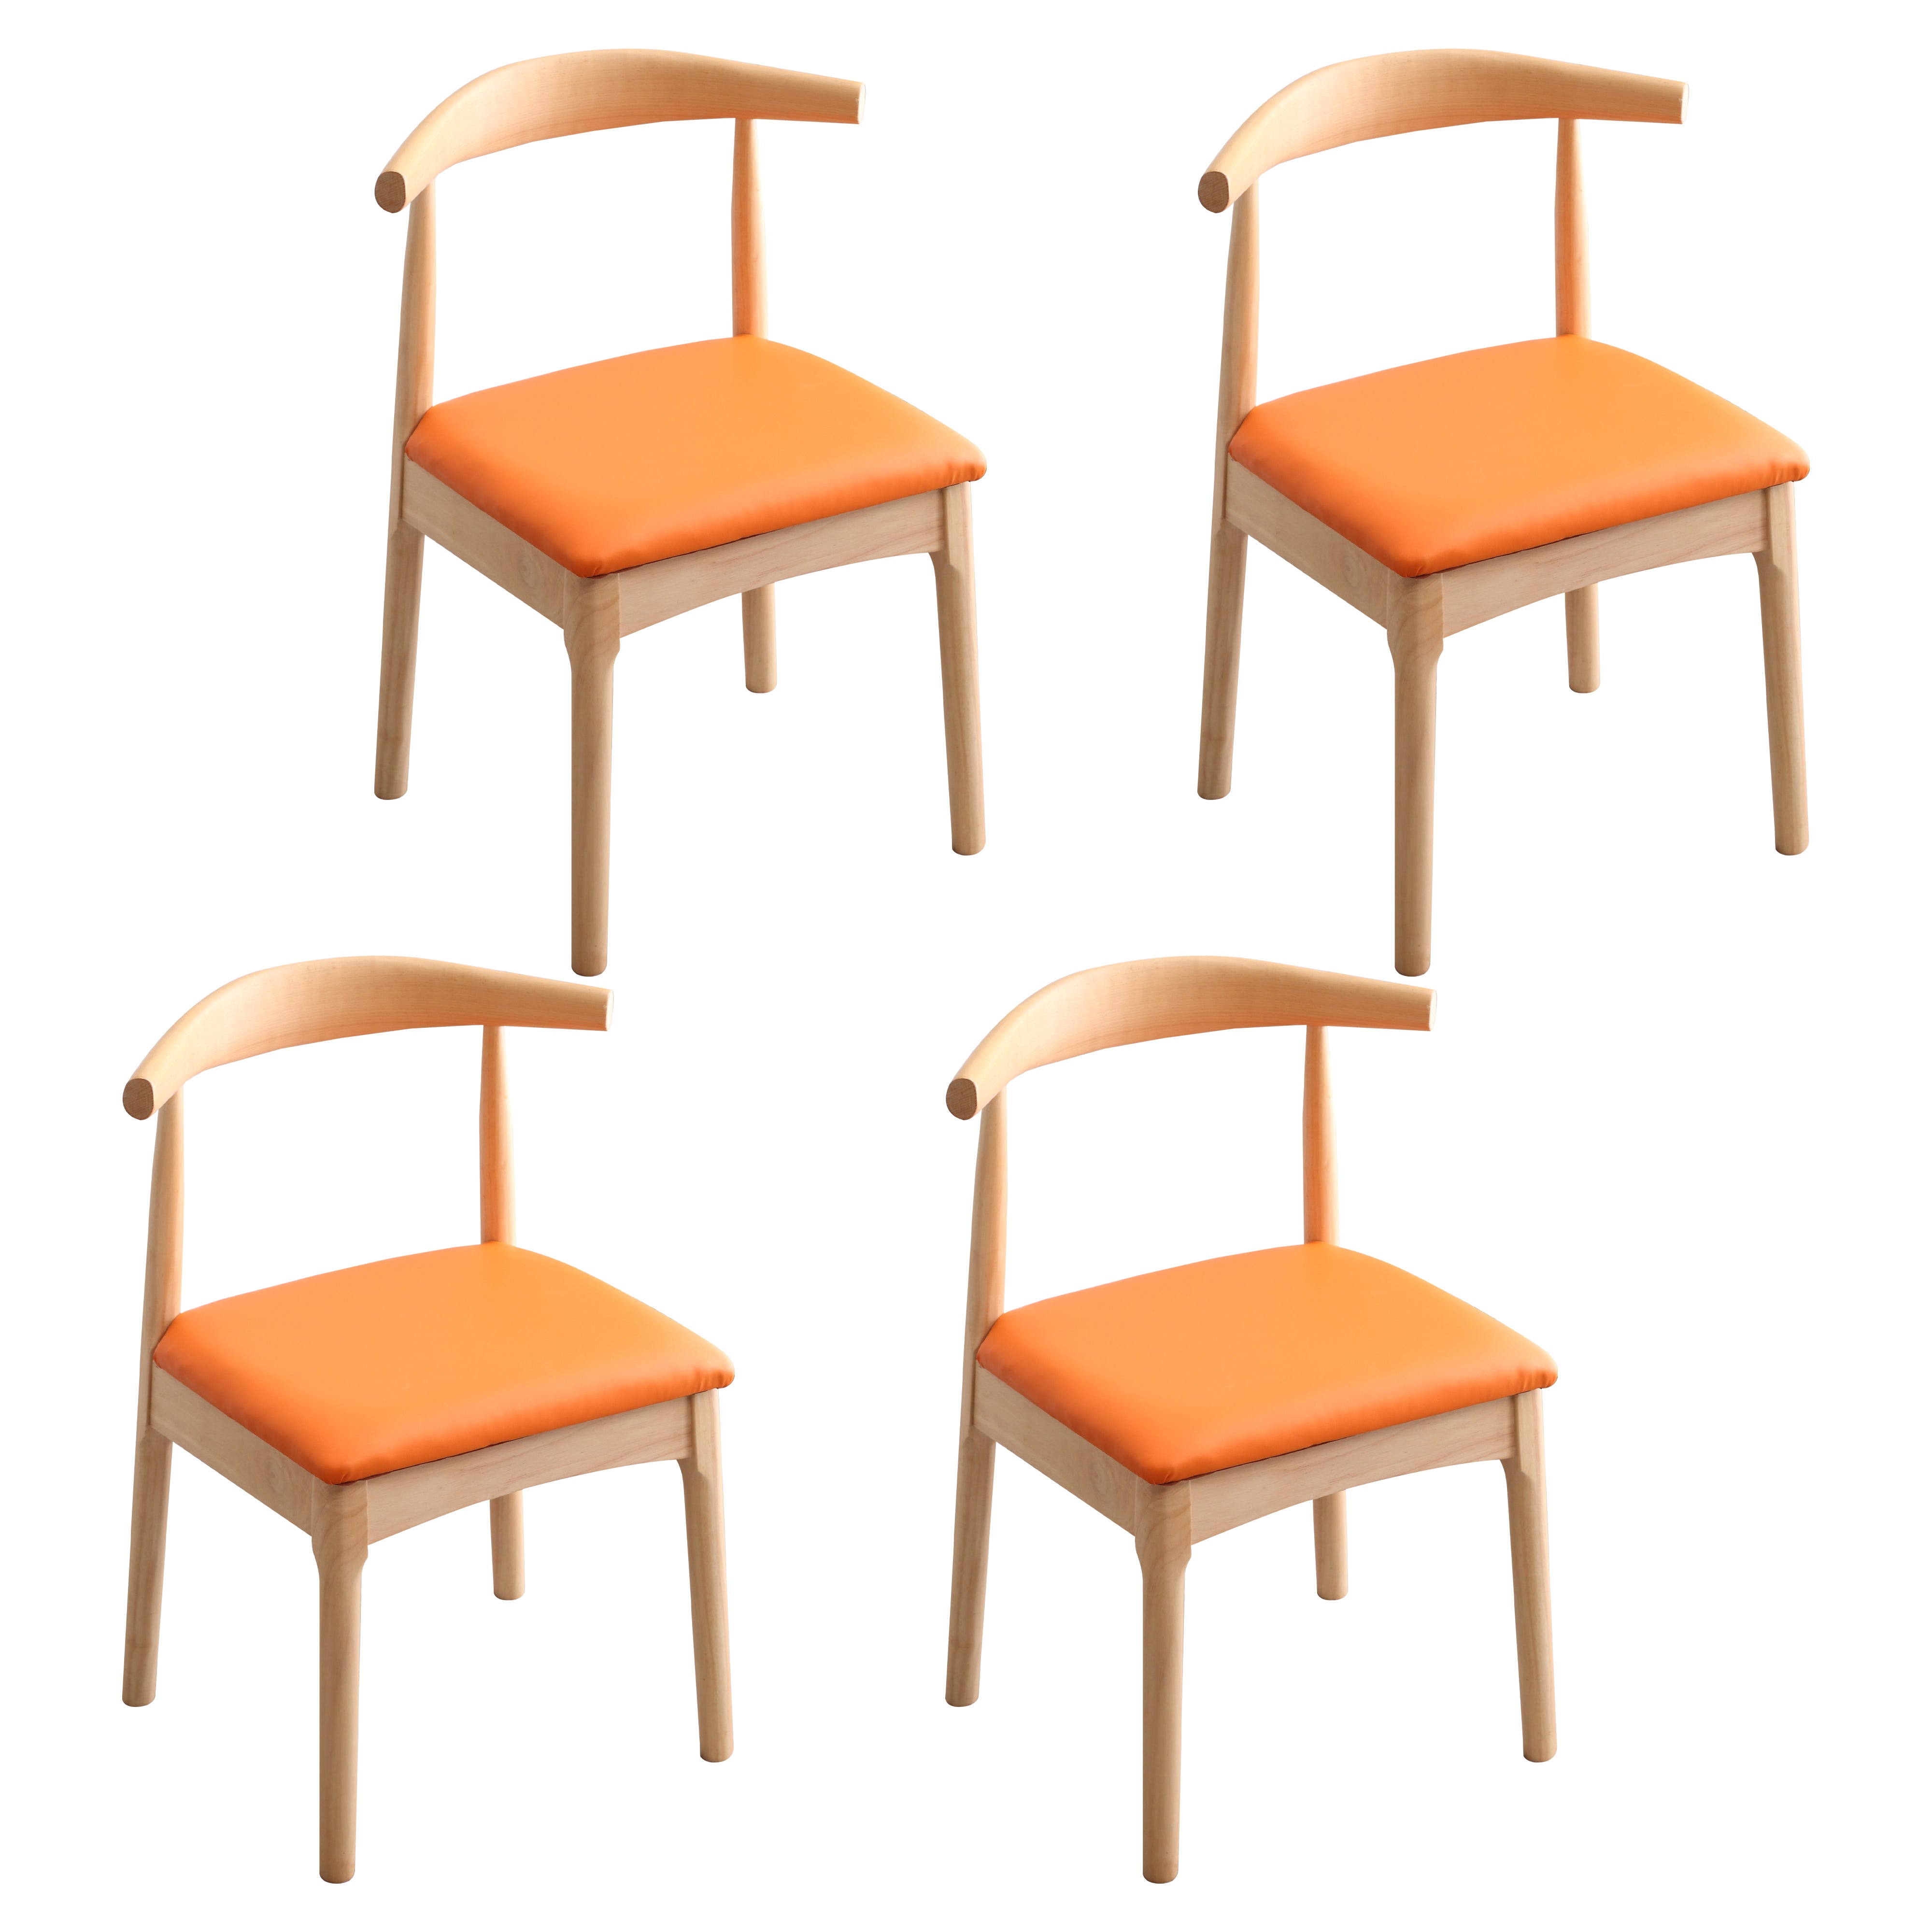 Innenskandinavische Seitenstuhl offener gepolsterten Holz Speisesaal Stuhl offen